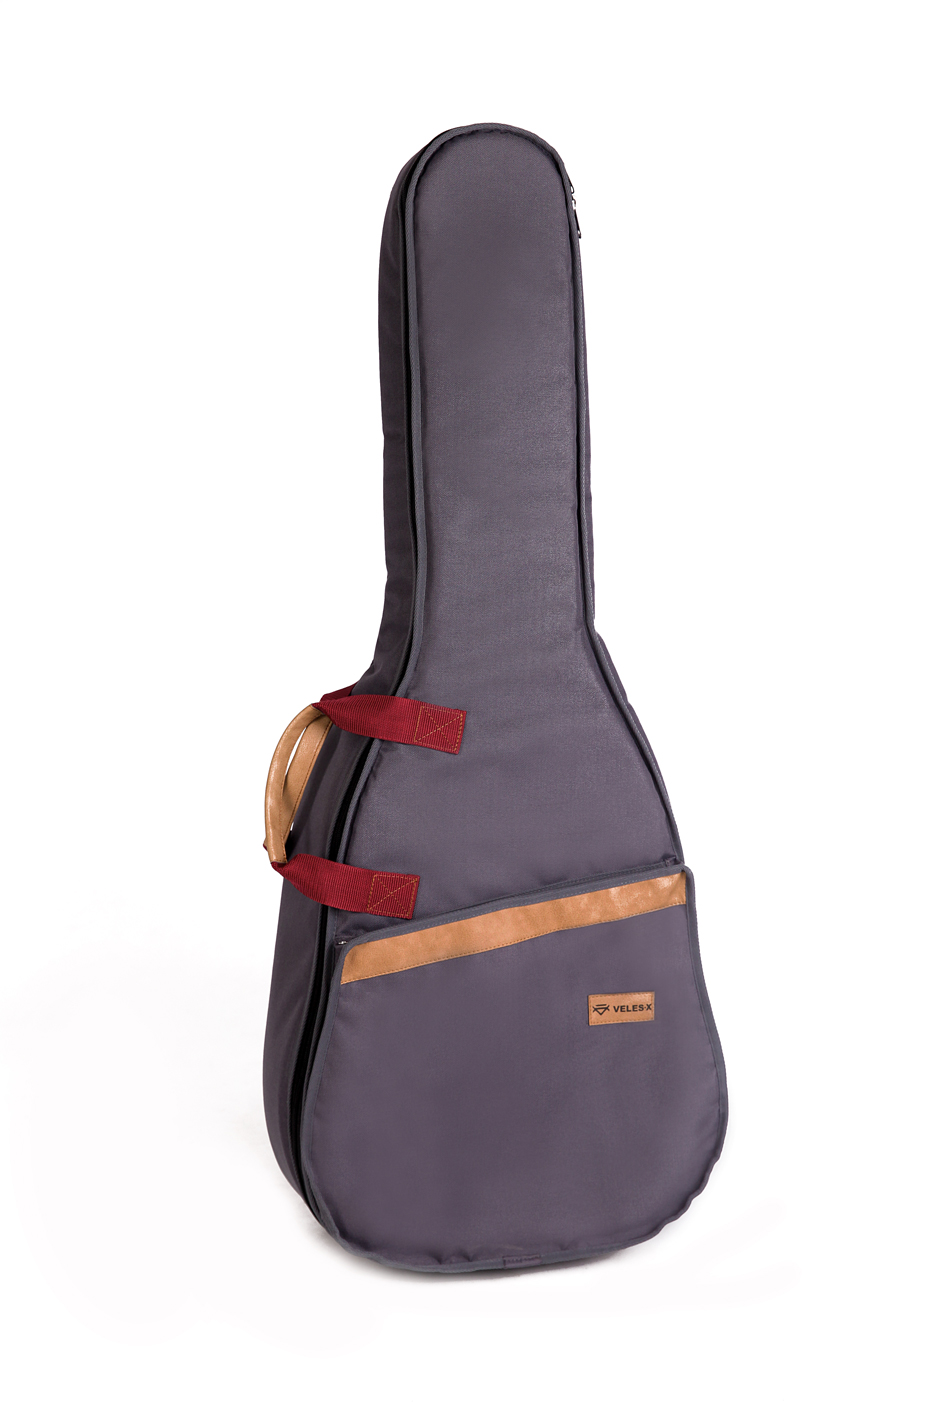 Musician's Gear 3/4 Size Acoustic Guitar Gig Bag - Walmart.com